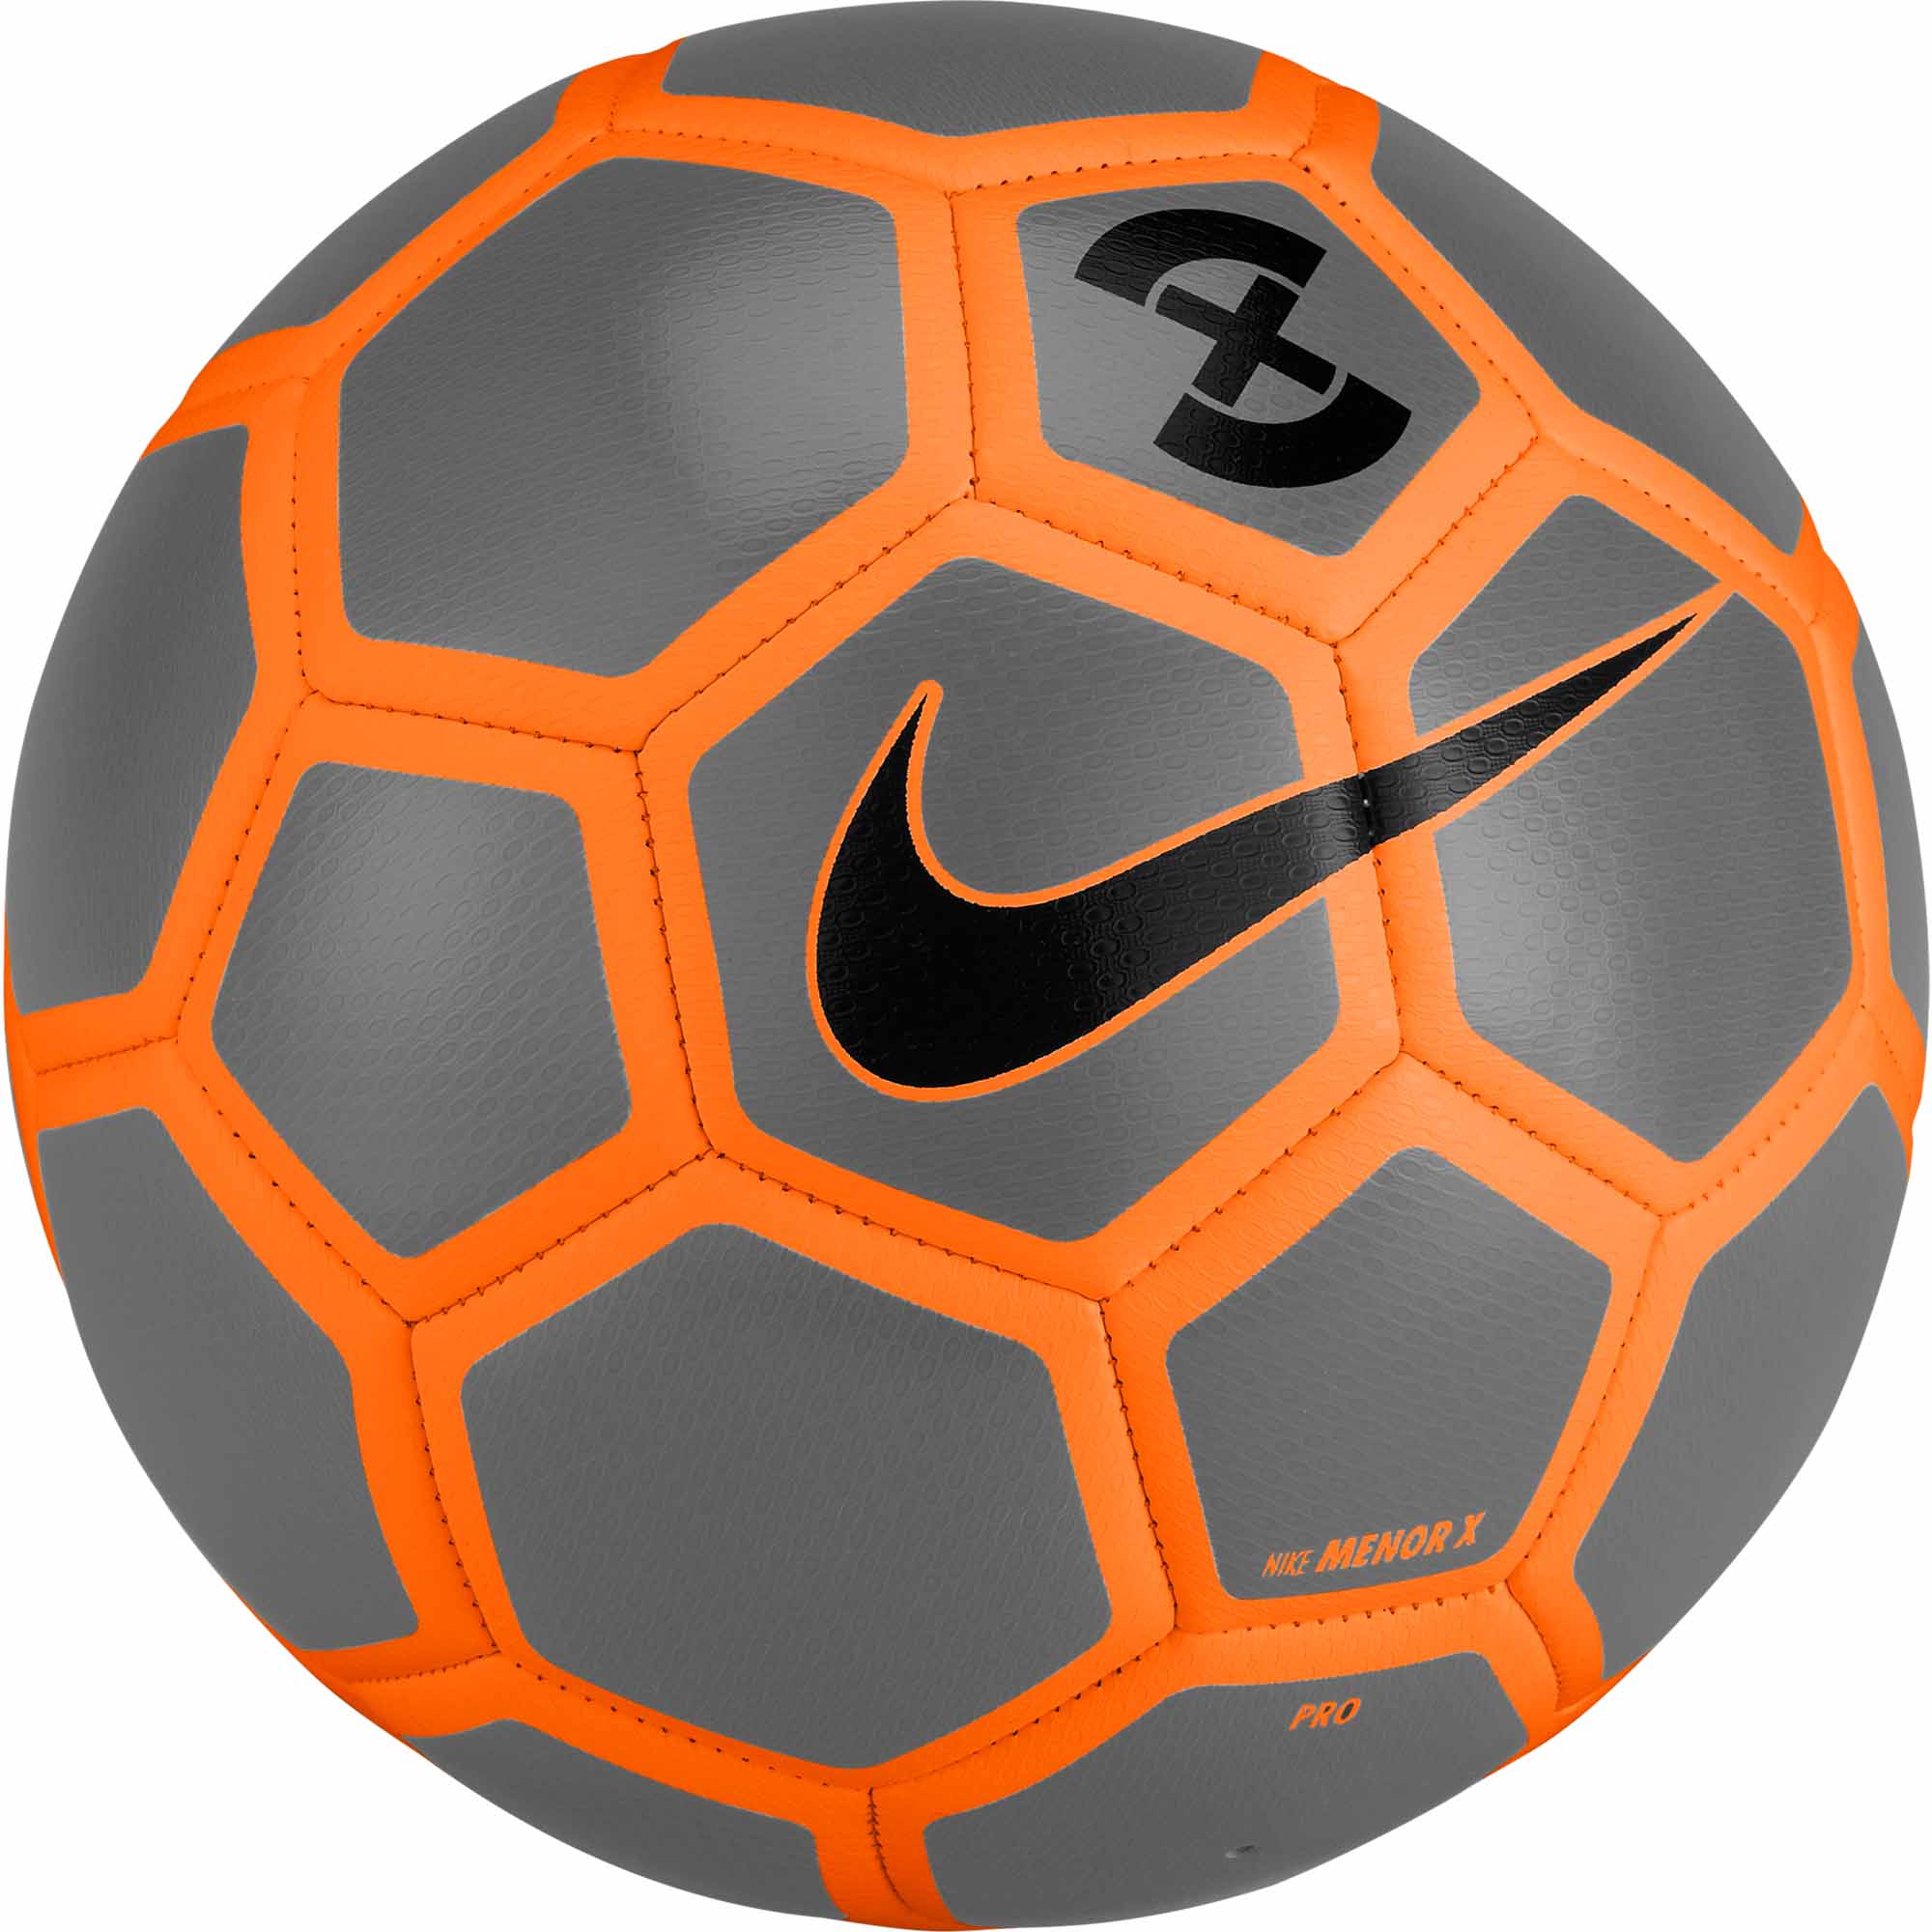 Nike Menor X Futsal Ball - Grey Nike 